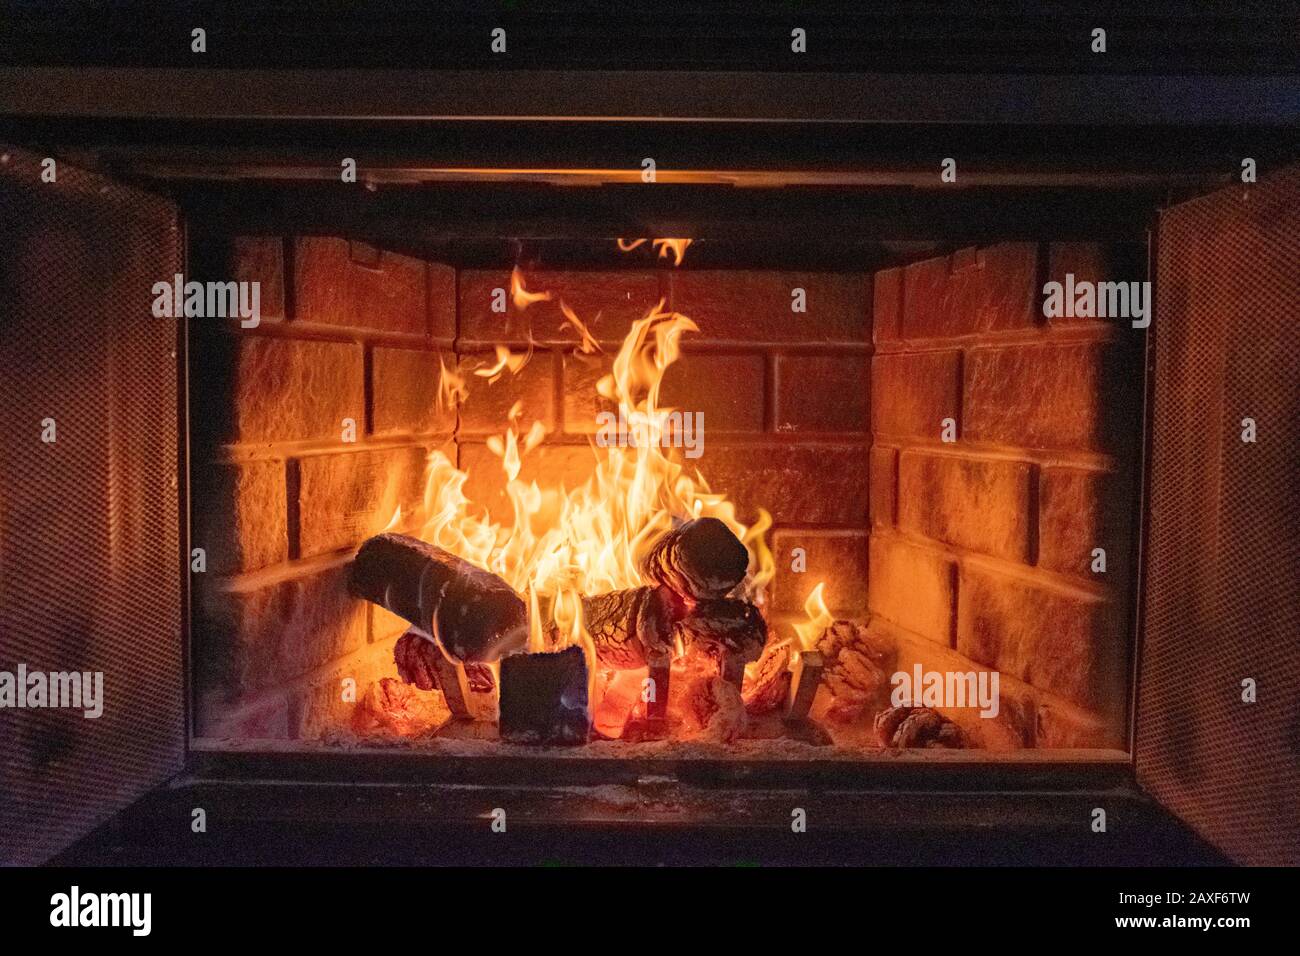 Closeup shot of a fire in a brick fireplace Stock Photo